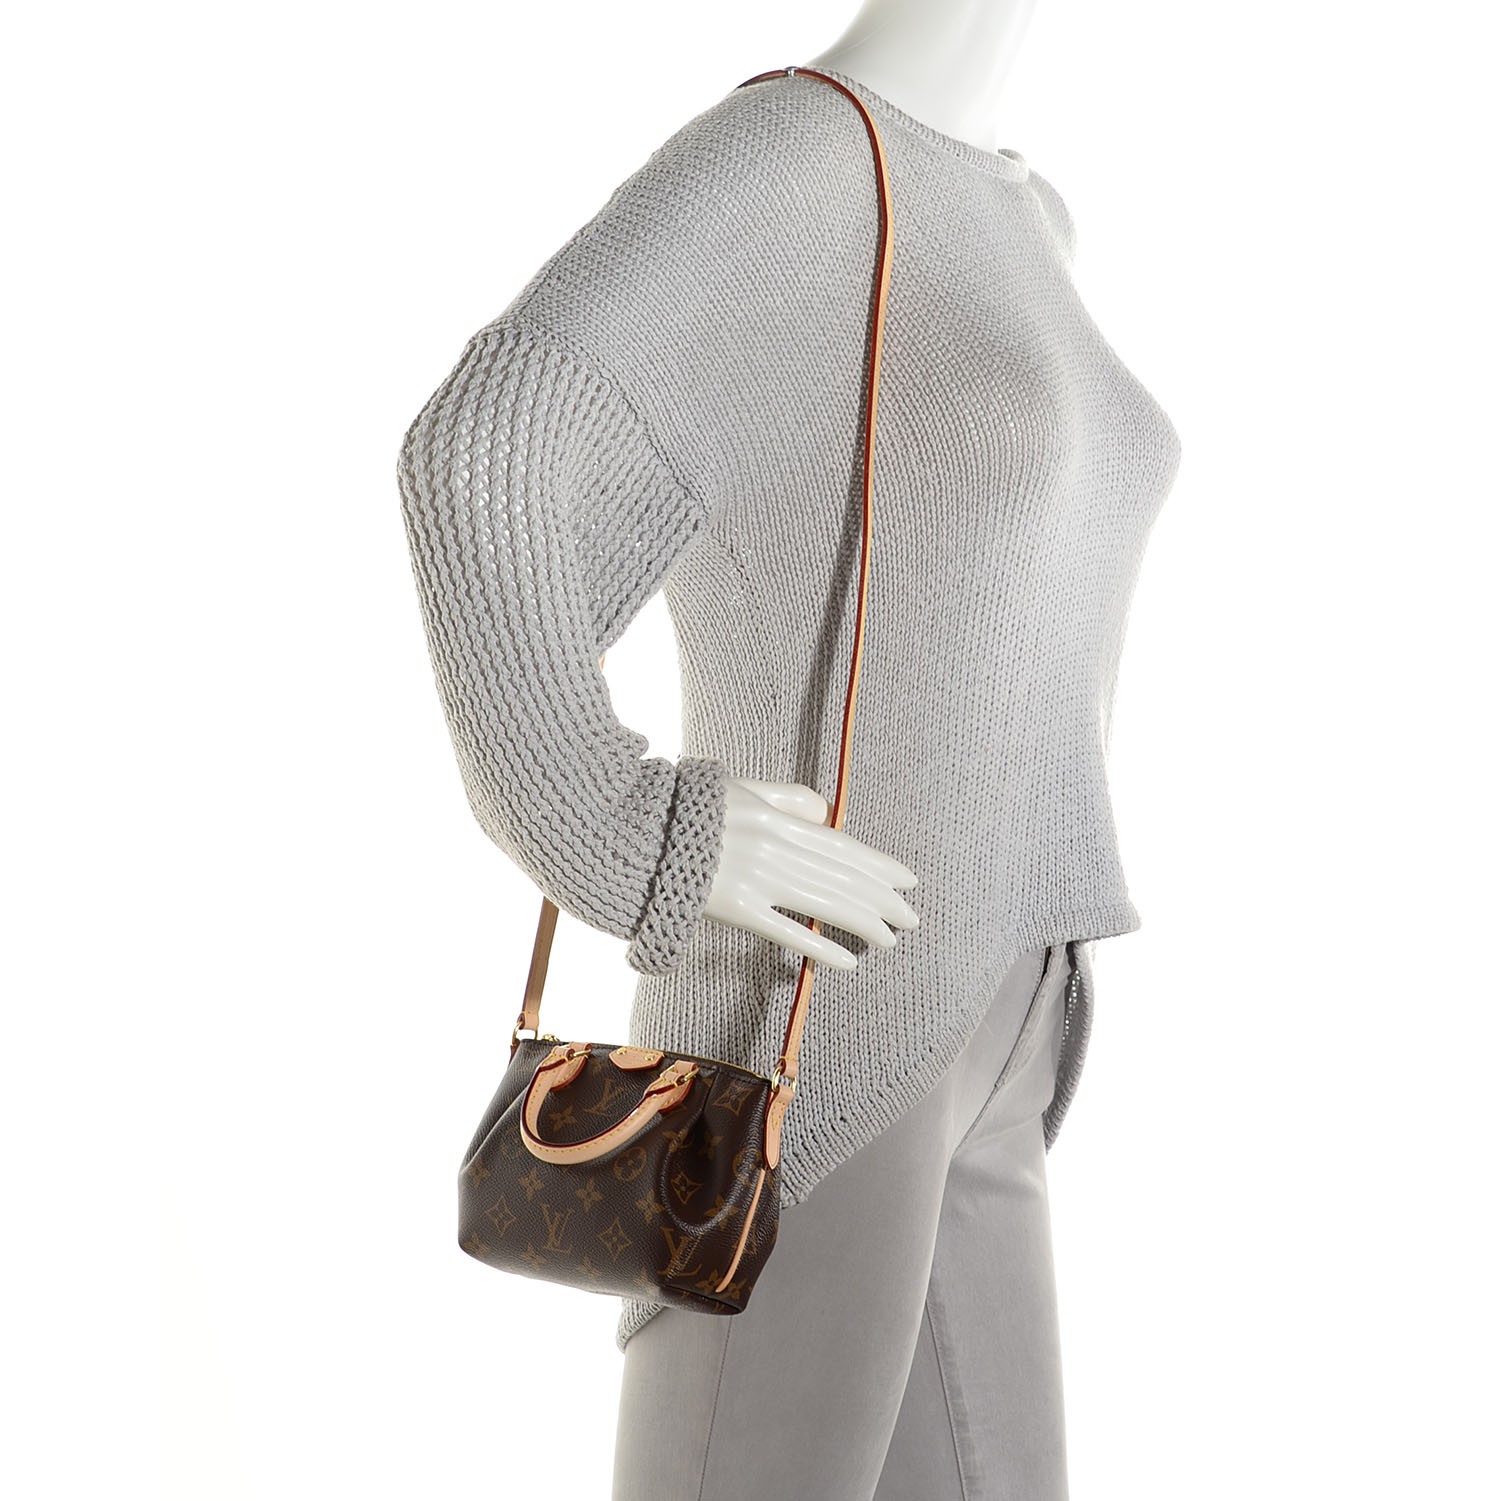 LV M61253 Nano mini women sling bag